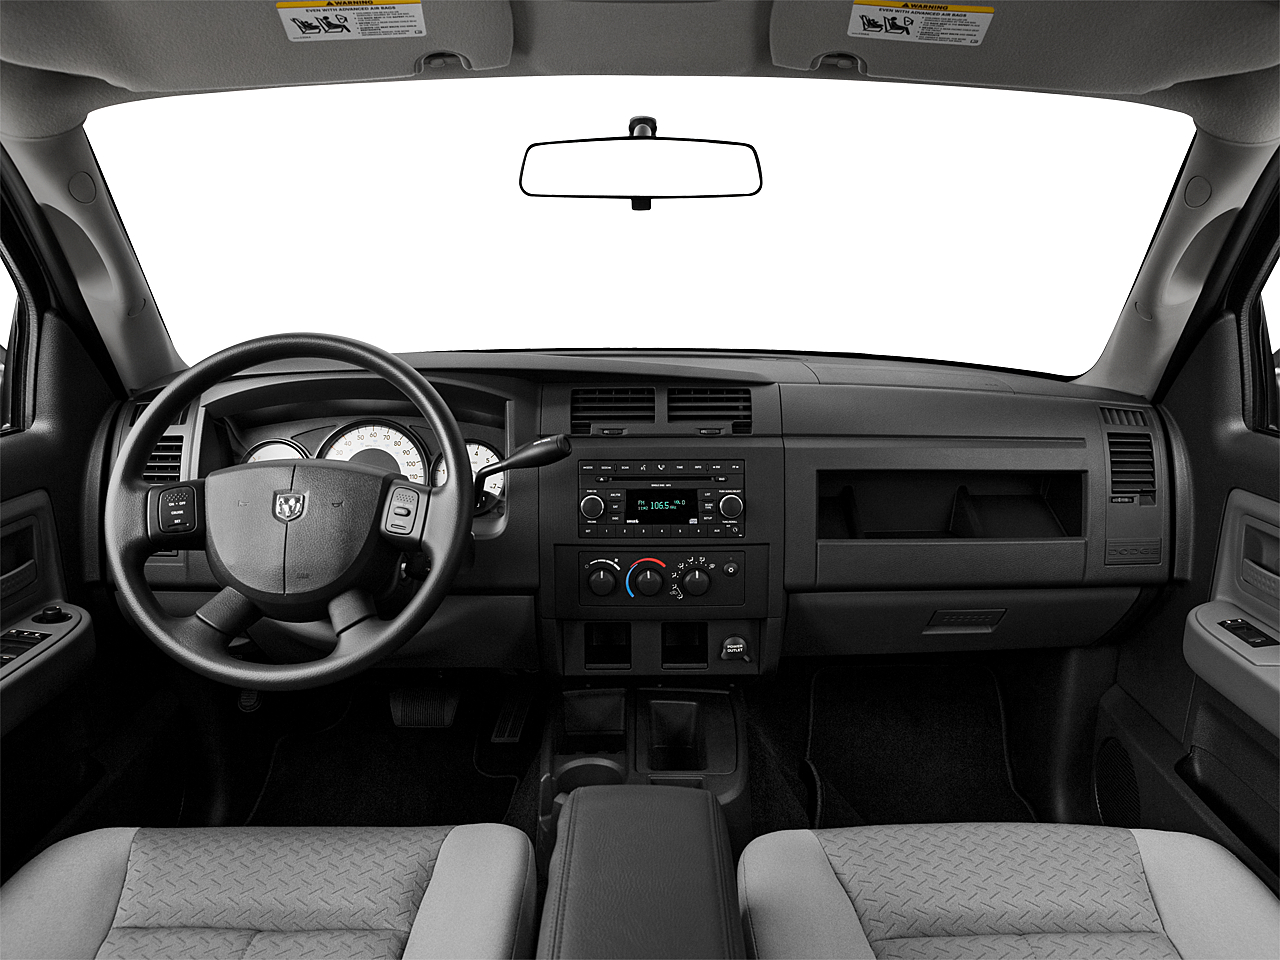 2008 Dodge Dakota BigHorn 4dr Extended Cab SB - Research - GrooveCar